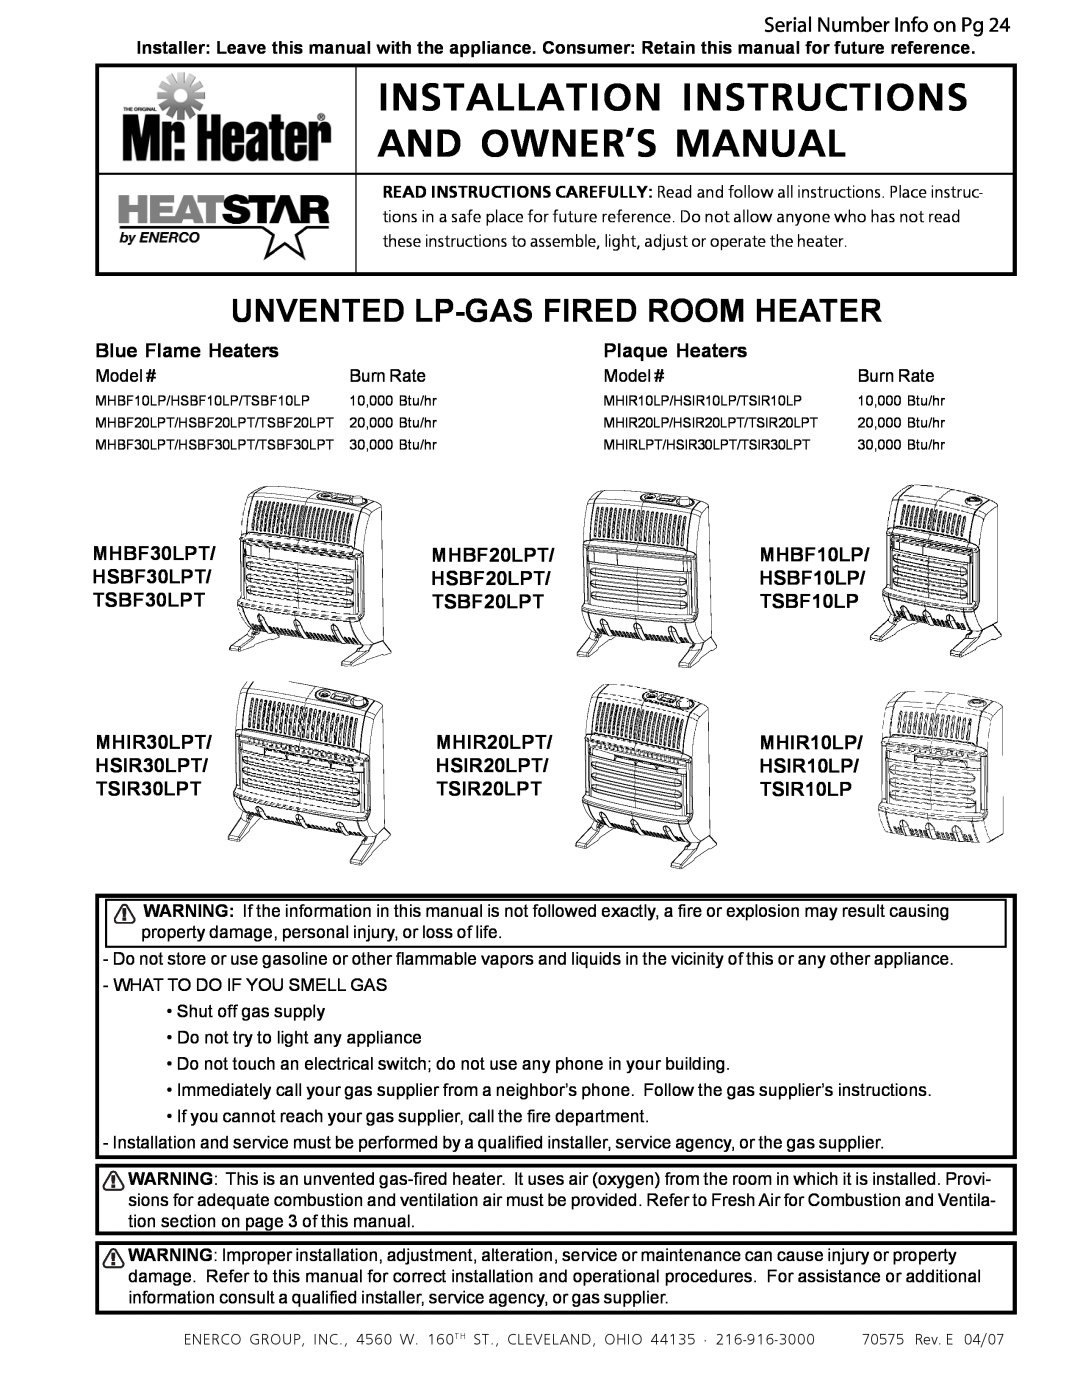 Enerco MHIR20LPT installation instructions Blue Flame Heaters, Plaque Heaters, MHBF30LPT, MHBF20LPT, TSBF20LPT, TSBF10LP 